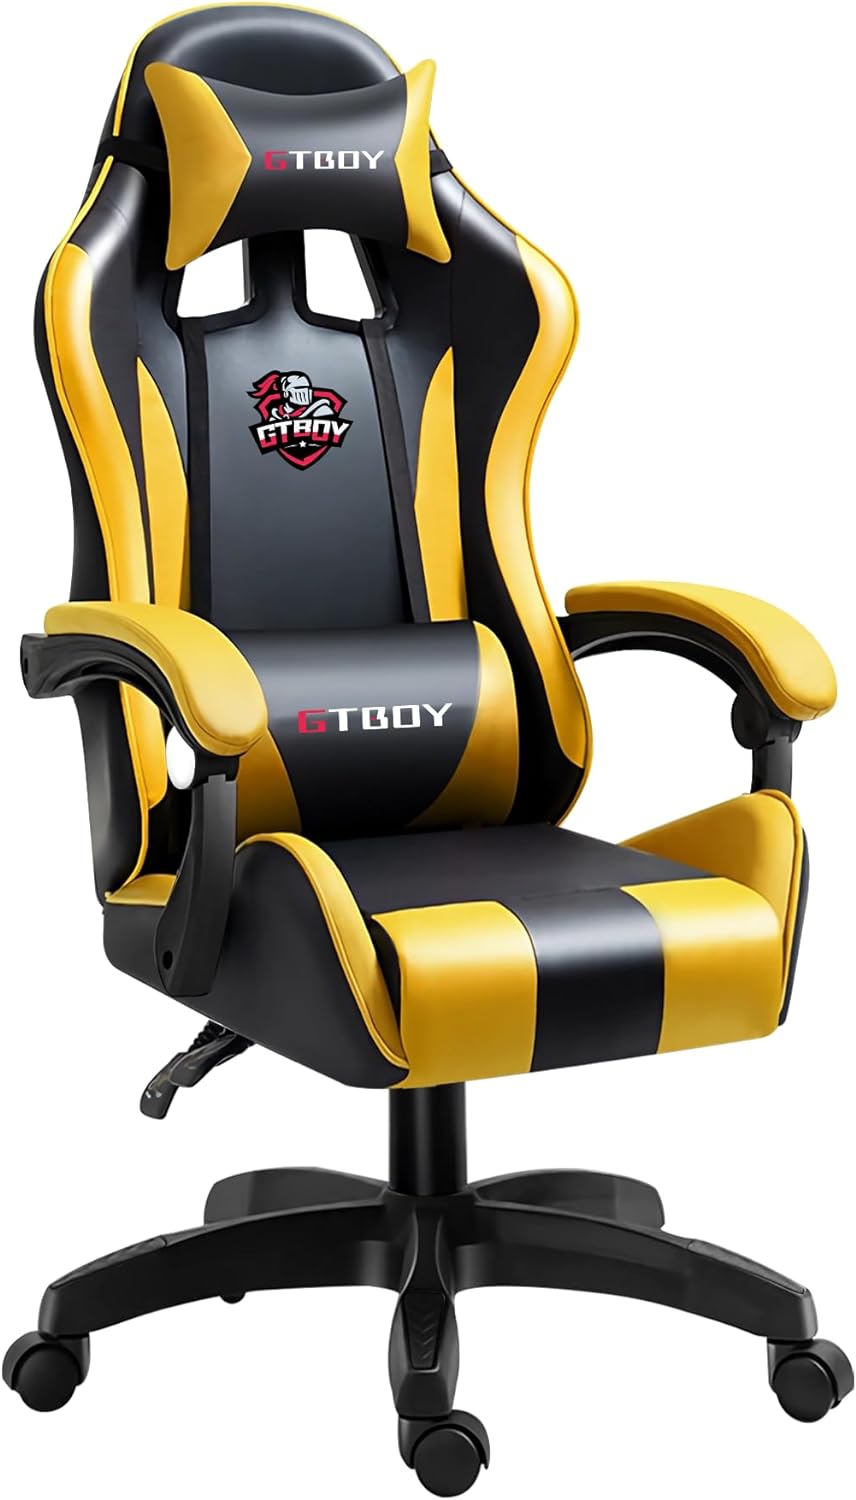 GTBoy ゲーミングチェア gaming chair PCゲーミングチェア ゲーム用チェア デスク pcチェア 椅子 テレワーク 140°リクライニング ゲームチェア ハイバック イス テレワーク【安心の非再生ウレタン採用】 (黒とイエロー, オットマンなし) 3